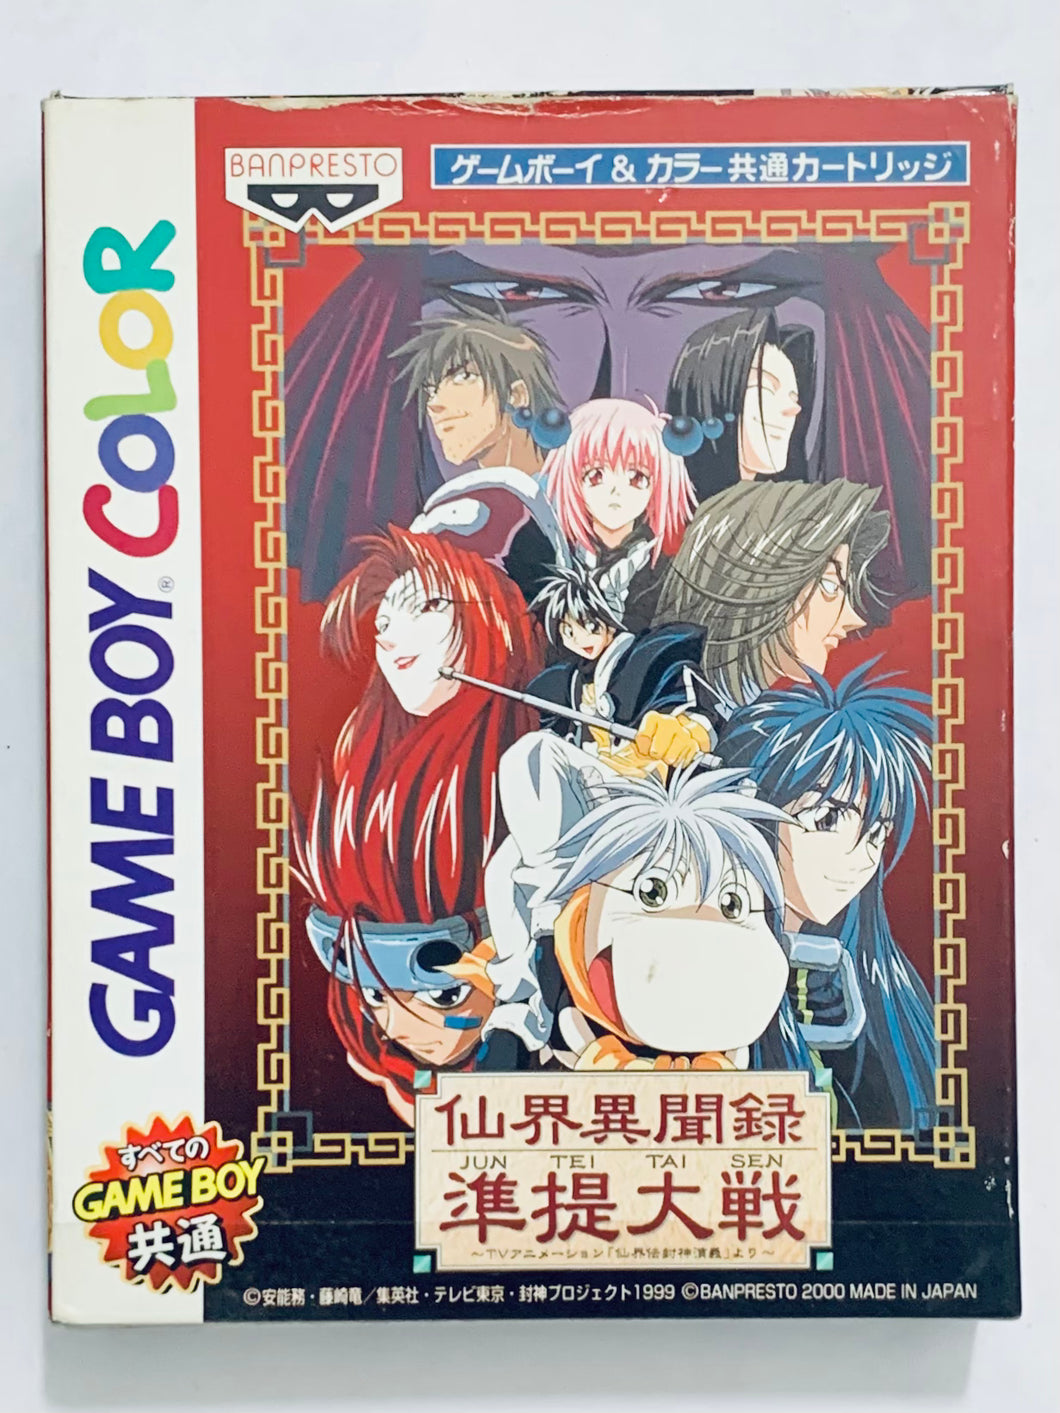 Senkai Ibunroku Juntei Taisen - GameBoy - Game Boy Color - Pocket - GBC - GBA - JP - CIB (DMG-BHSJ-JPN)